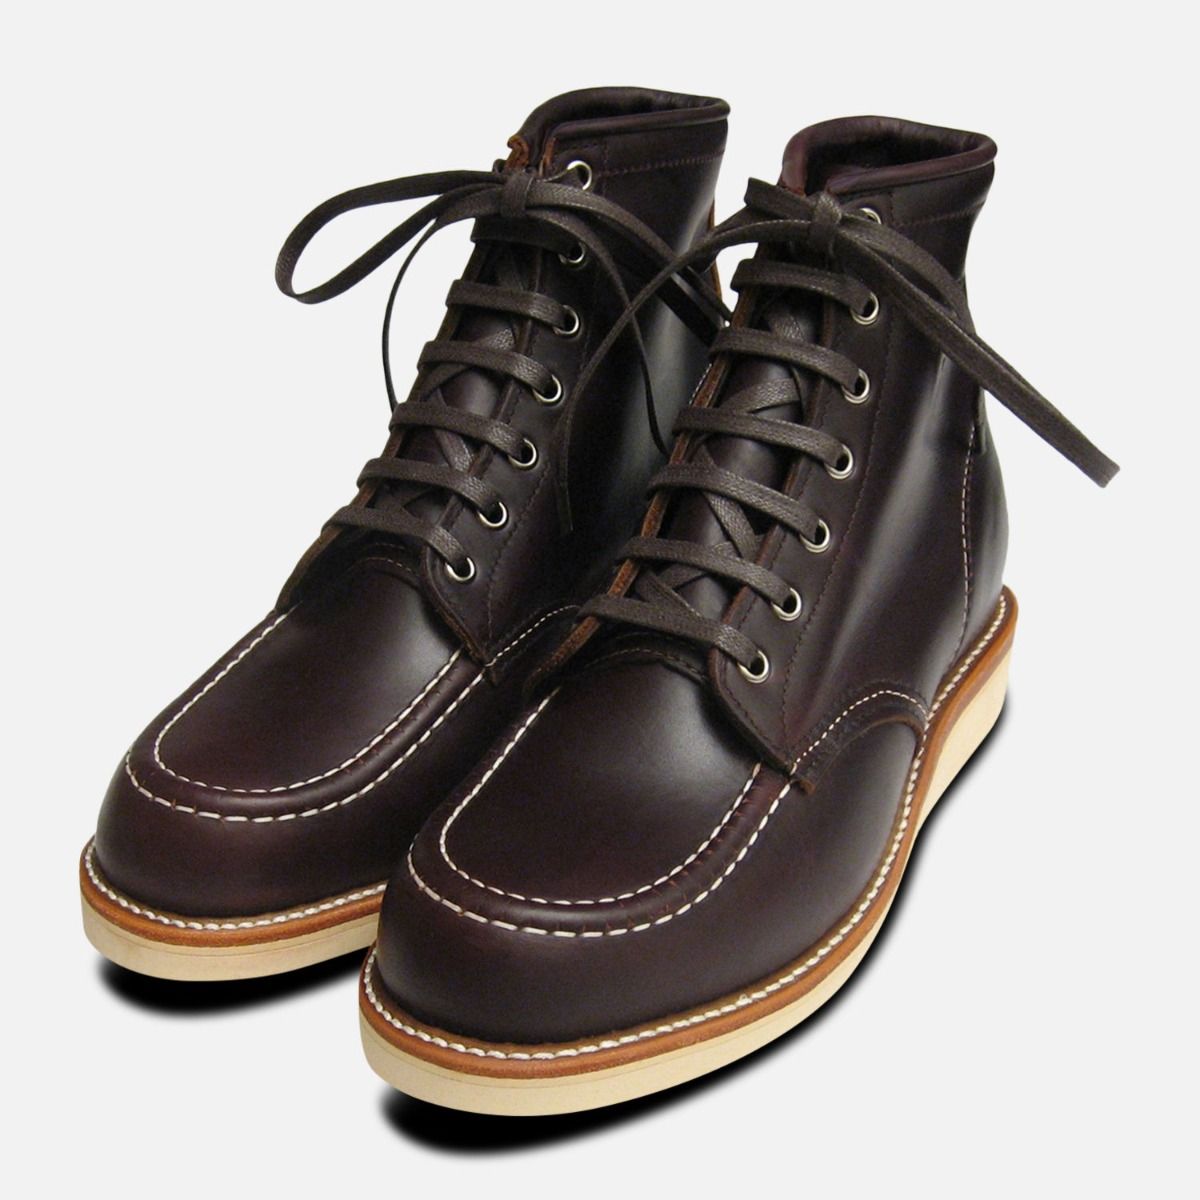 Chippewa Shoes Cordovan Leather Dark Burgundy 1901M20 Vibram Sole 